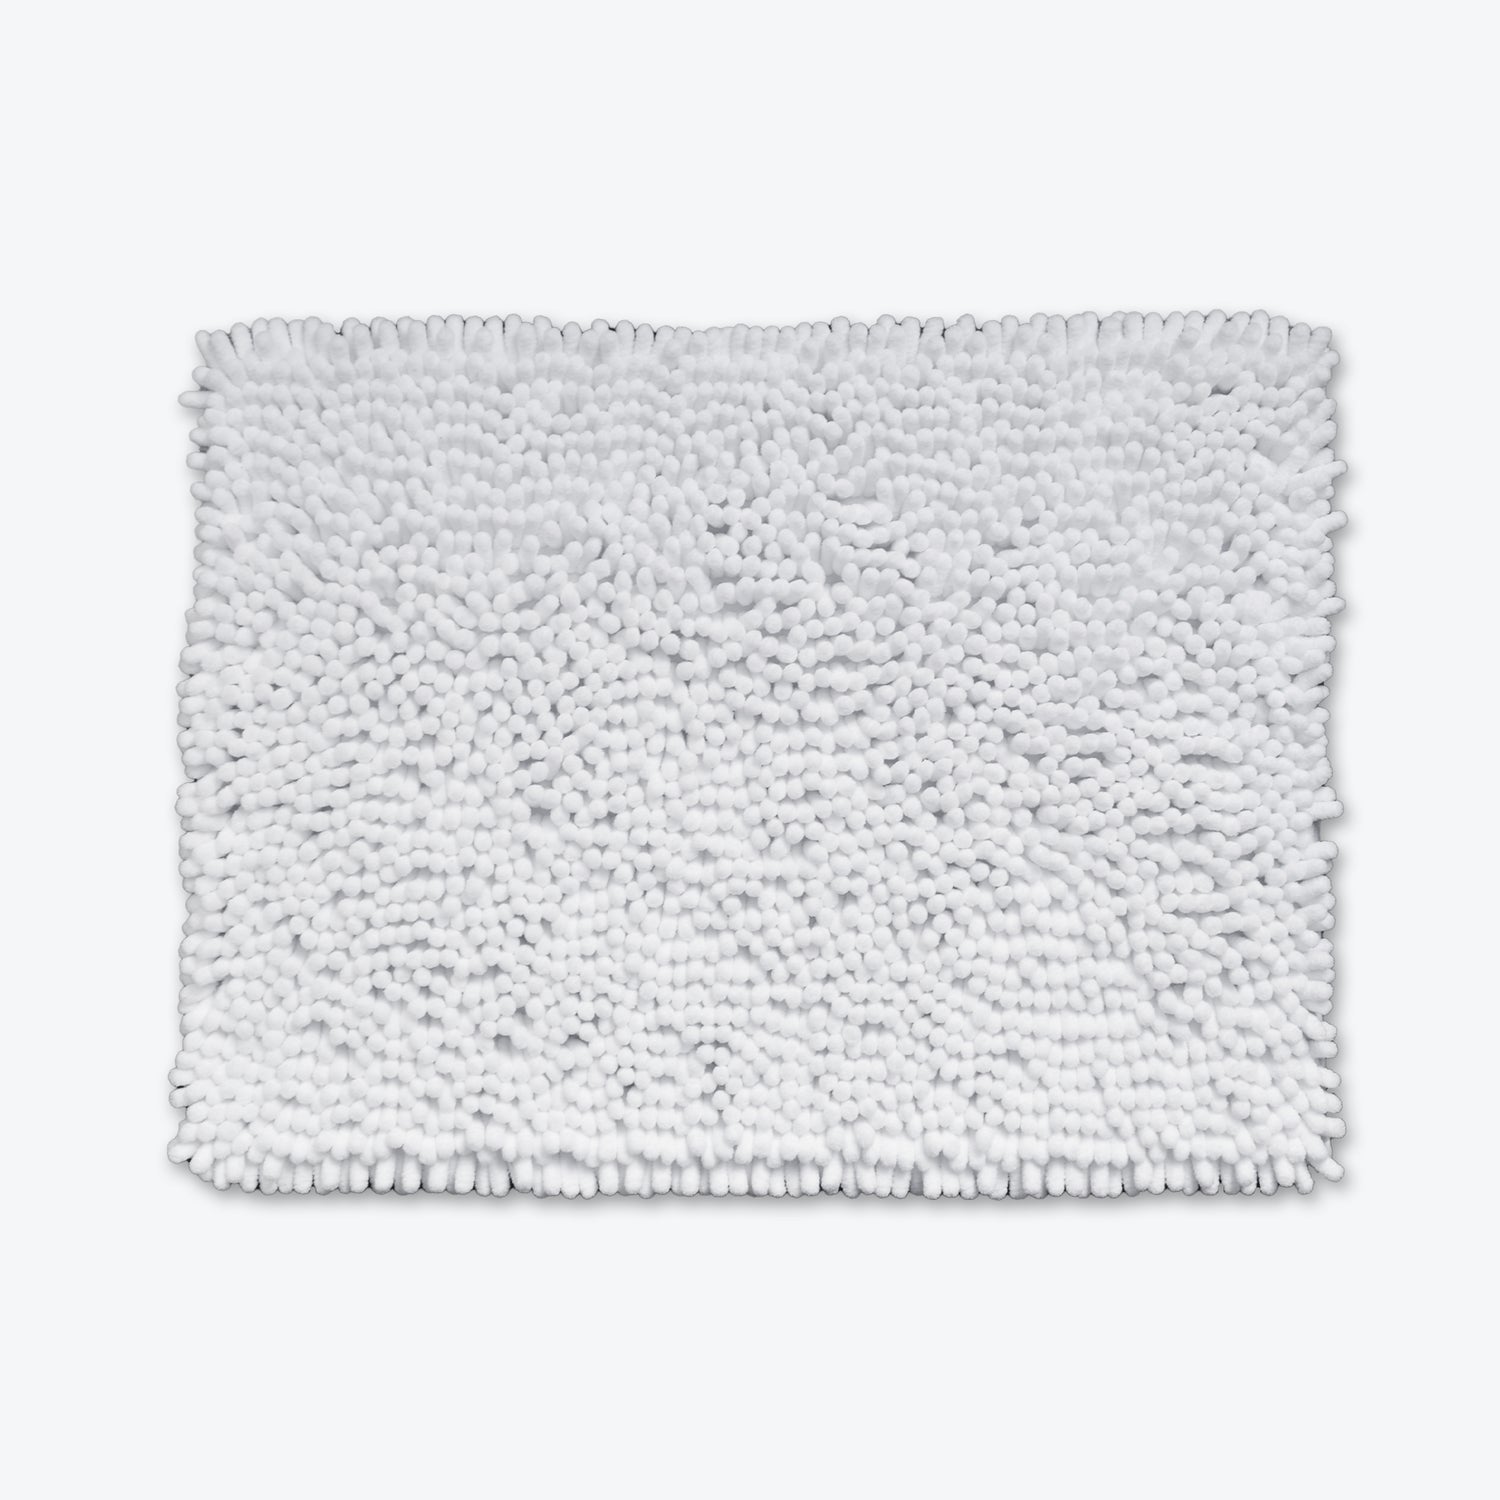 White chunky bobble bath mat, made from super plush chenille